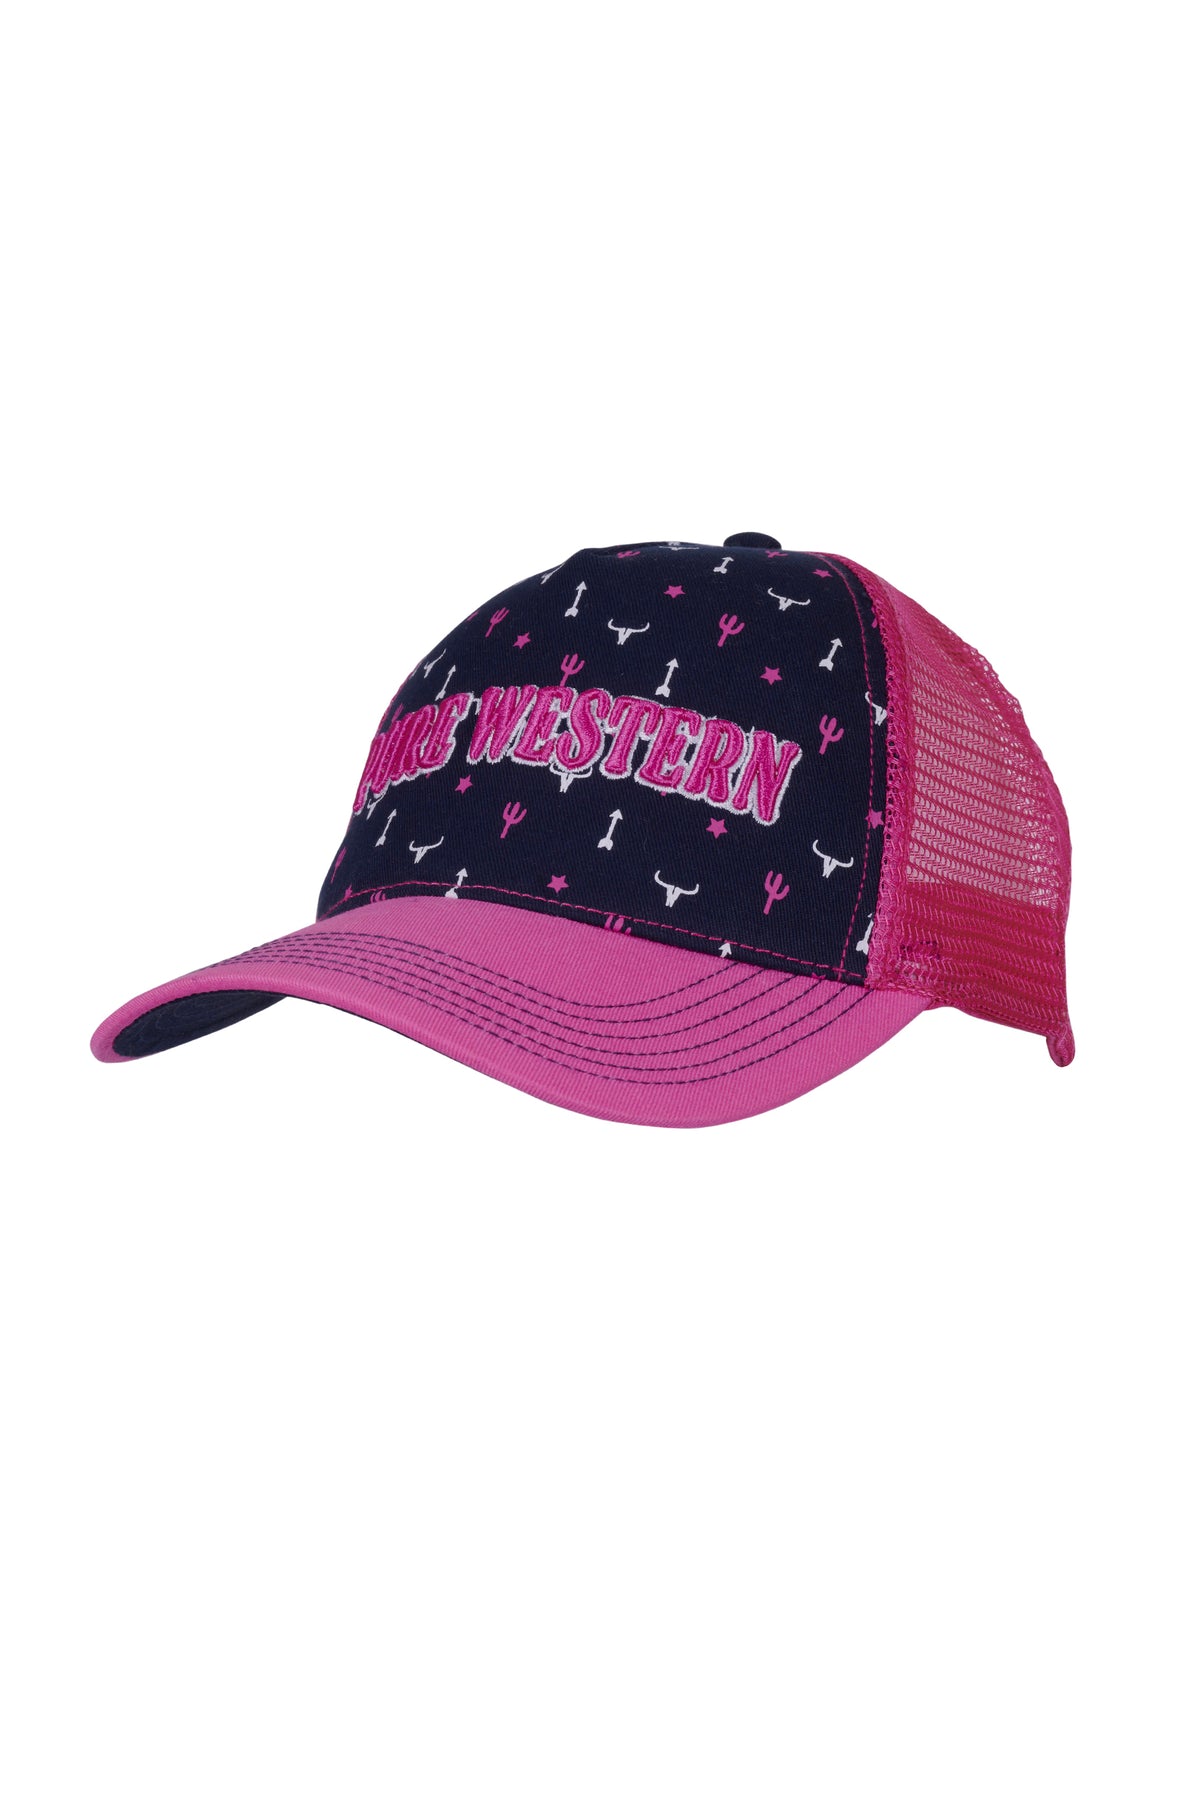 Pure Western Sybil Trucker Cap - Pink/ Navy